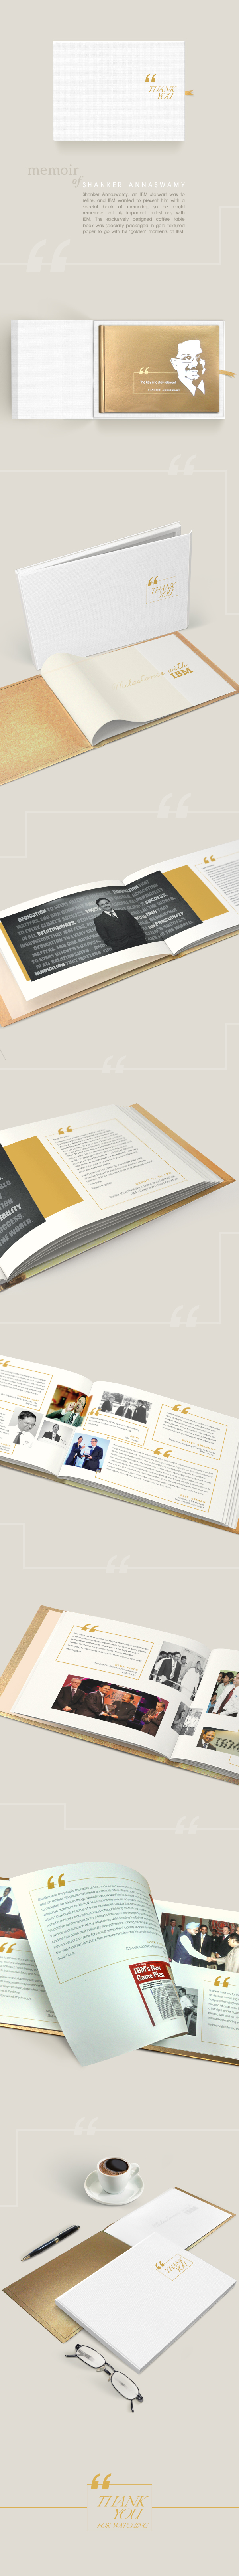 IBM memoir Shanker Shanker Annaswamy brochure COFFEE TABLE BOOK gold texture book hand book Coffee